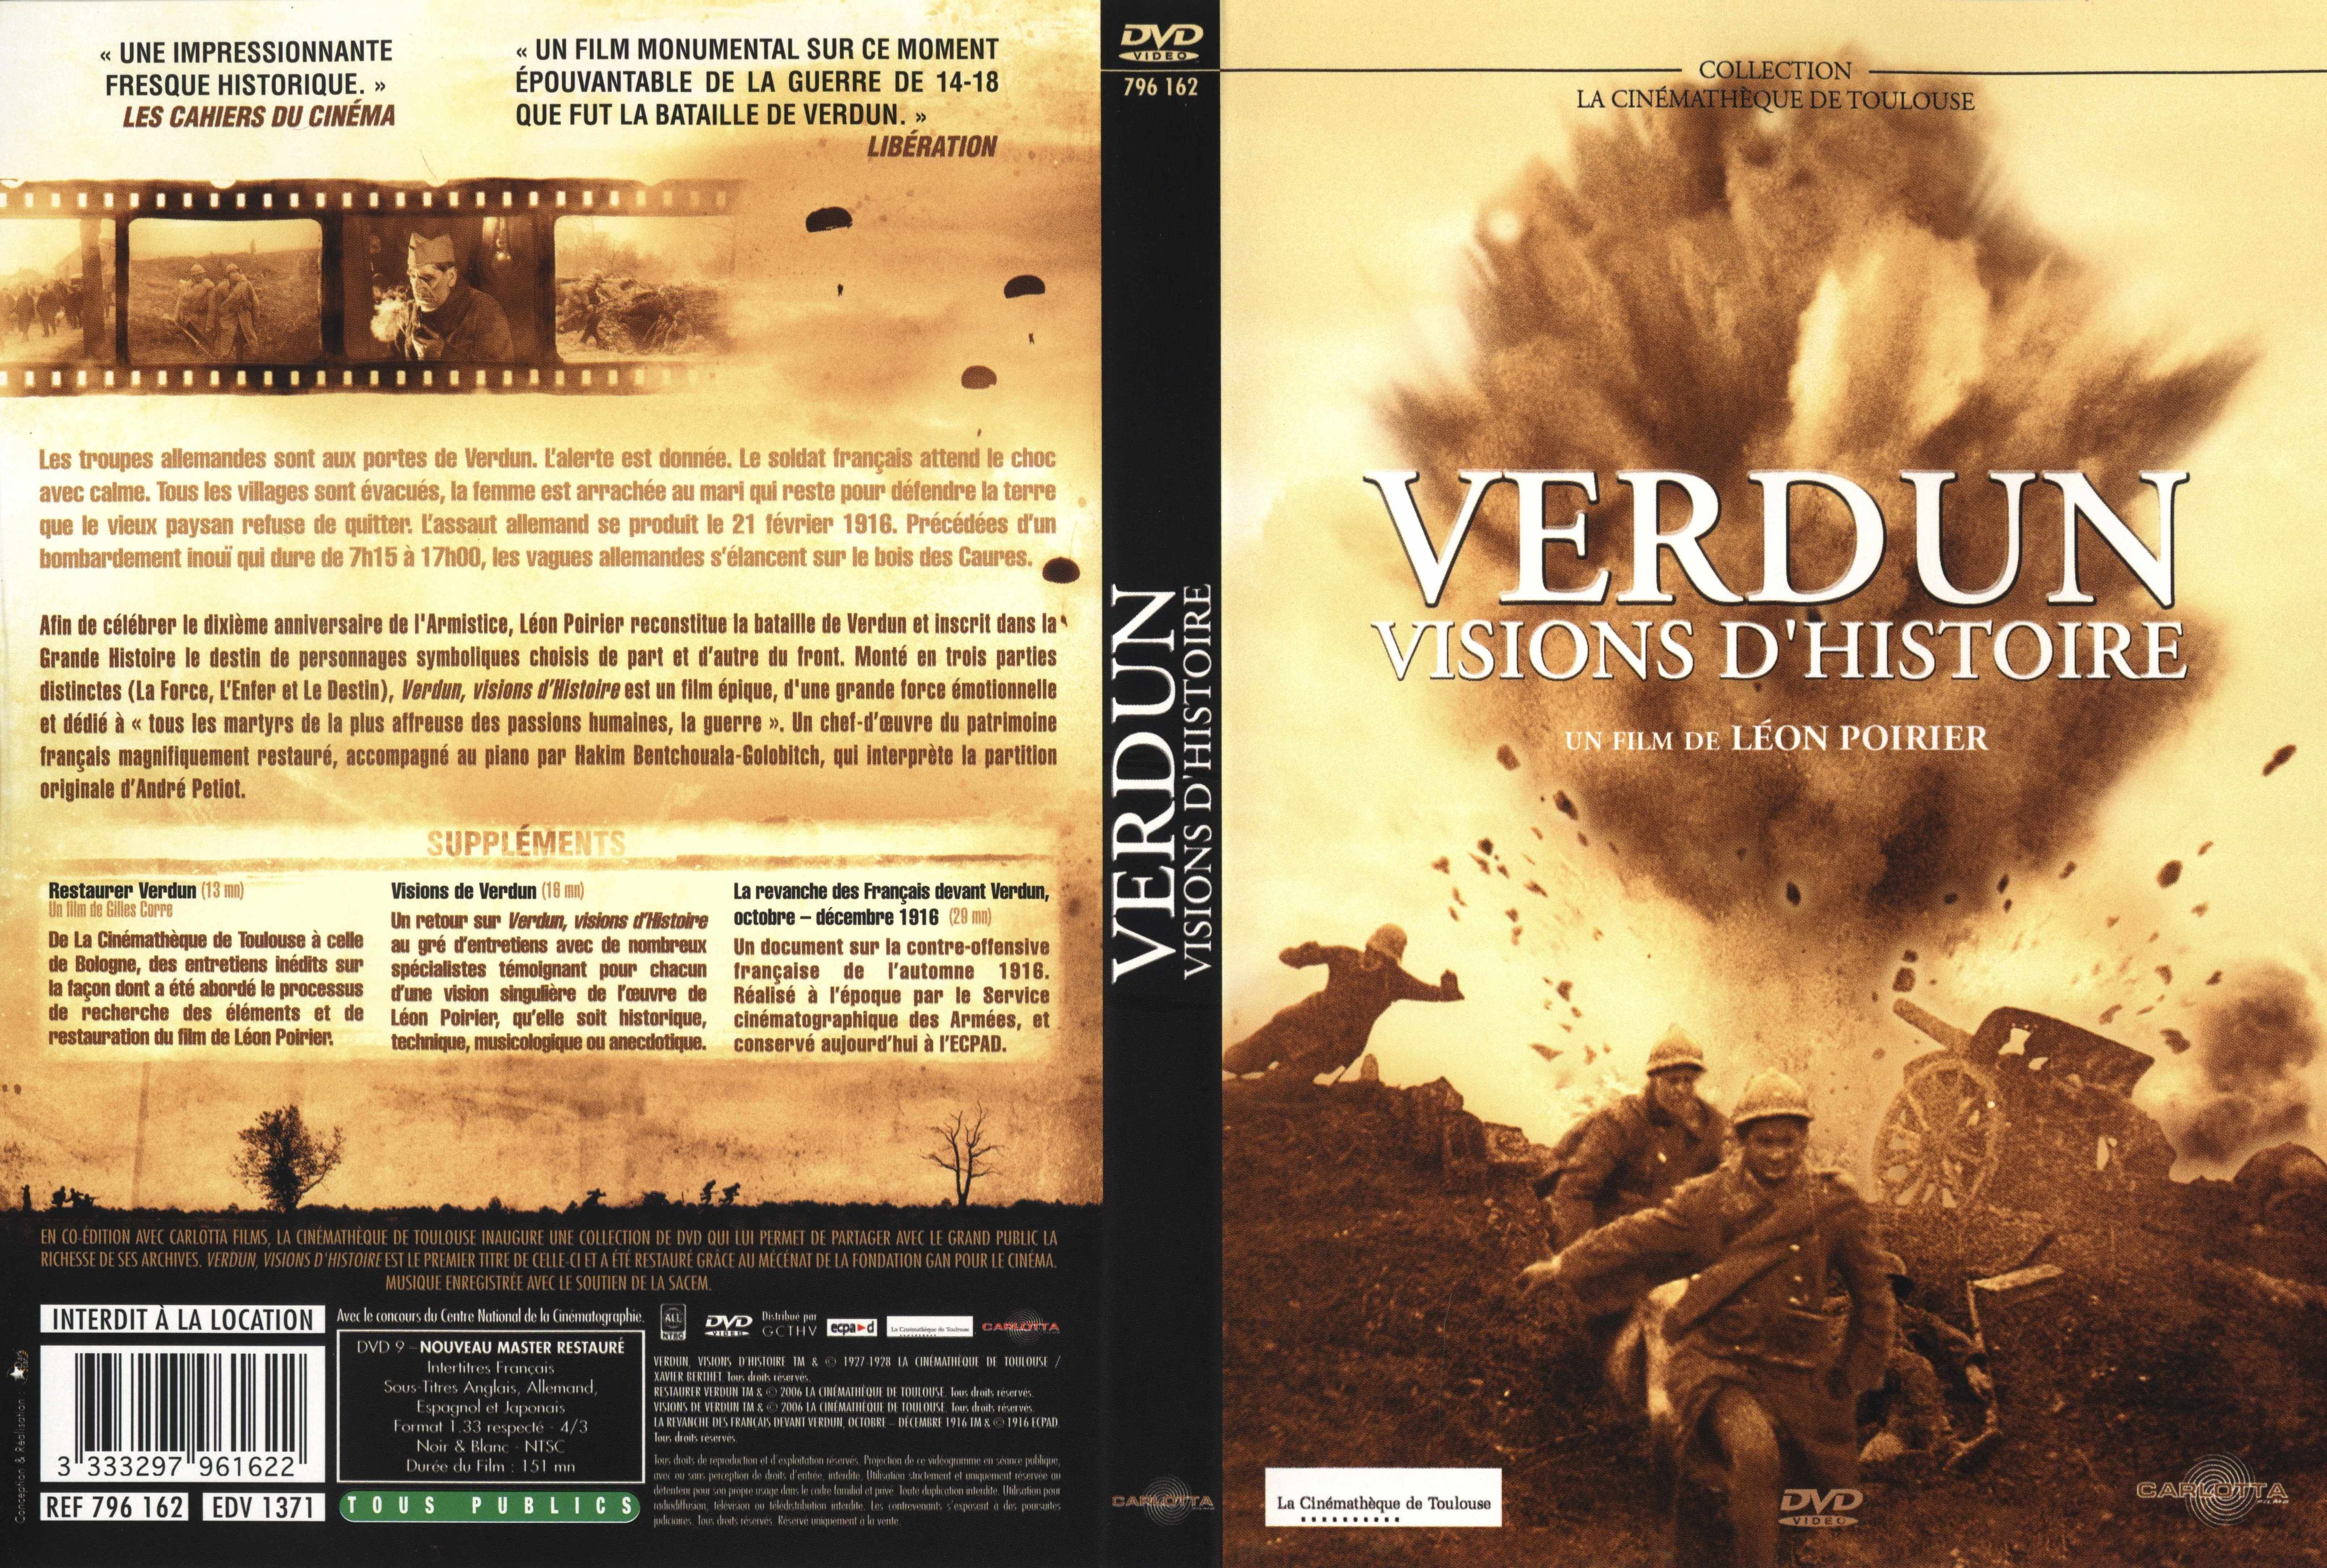 Jaquette DVD Verdun visions d